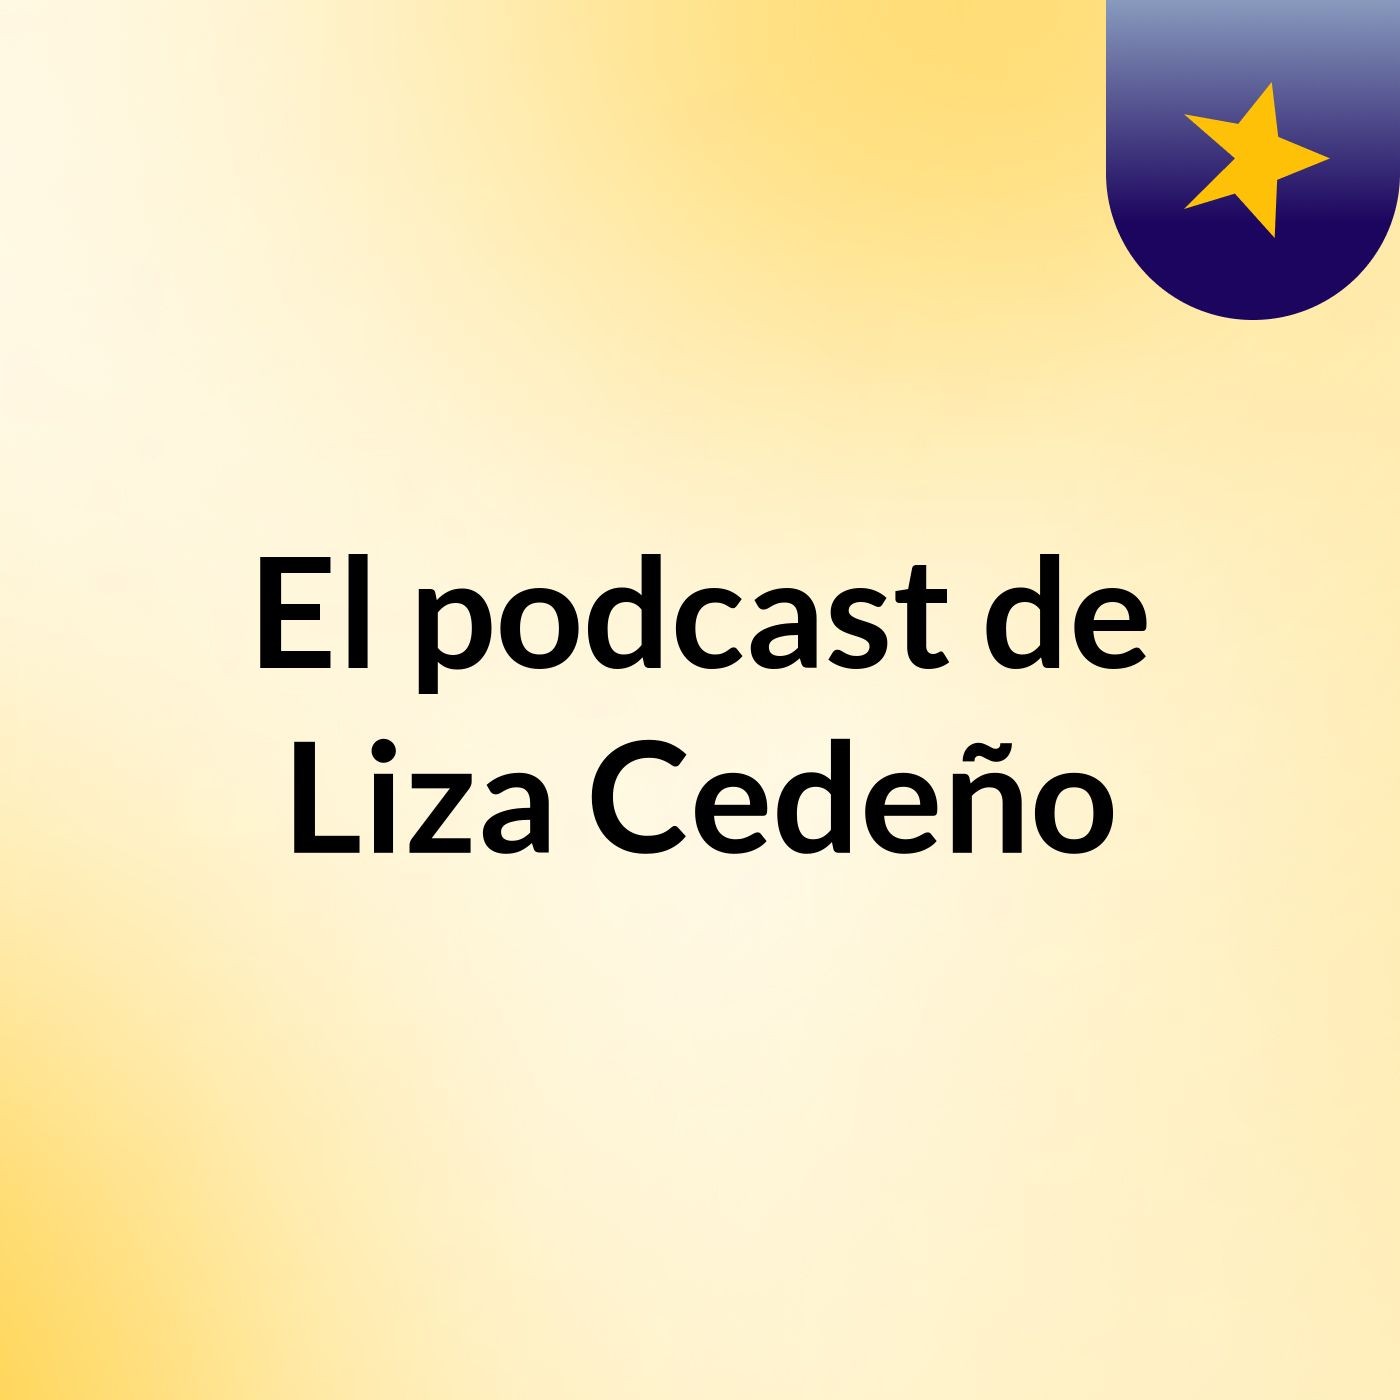 El podcast de Liza Cedeño